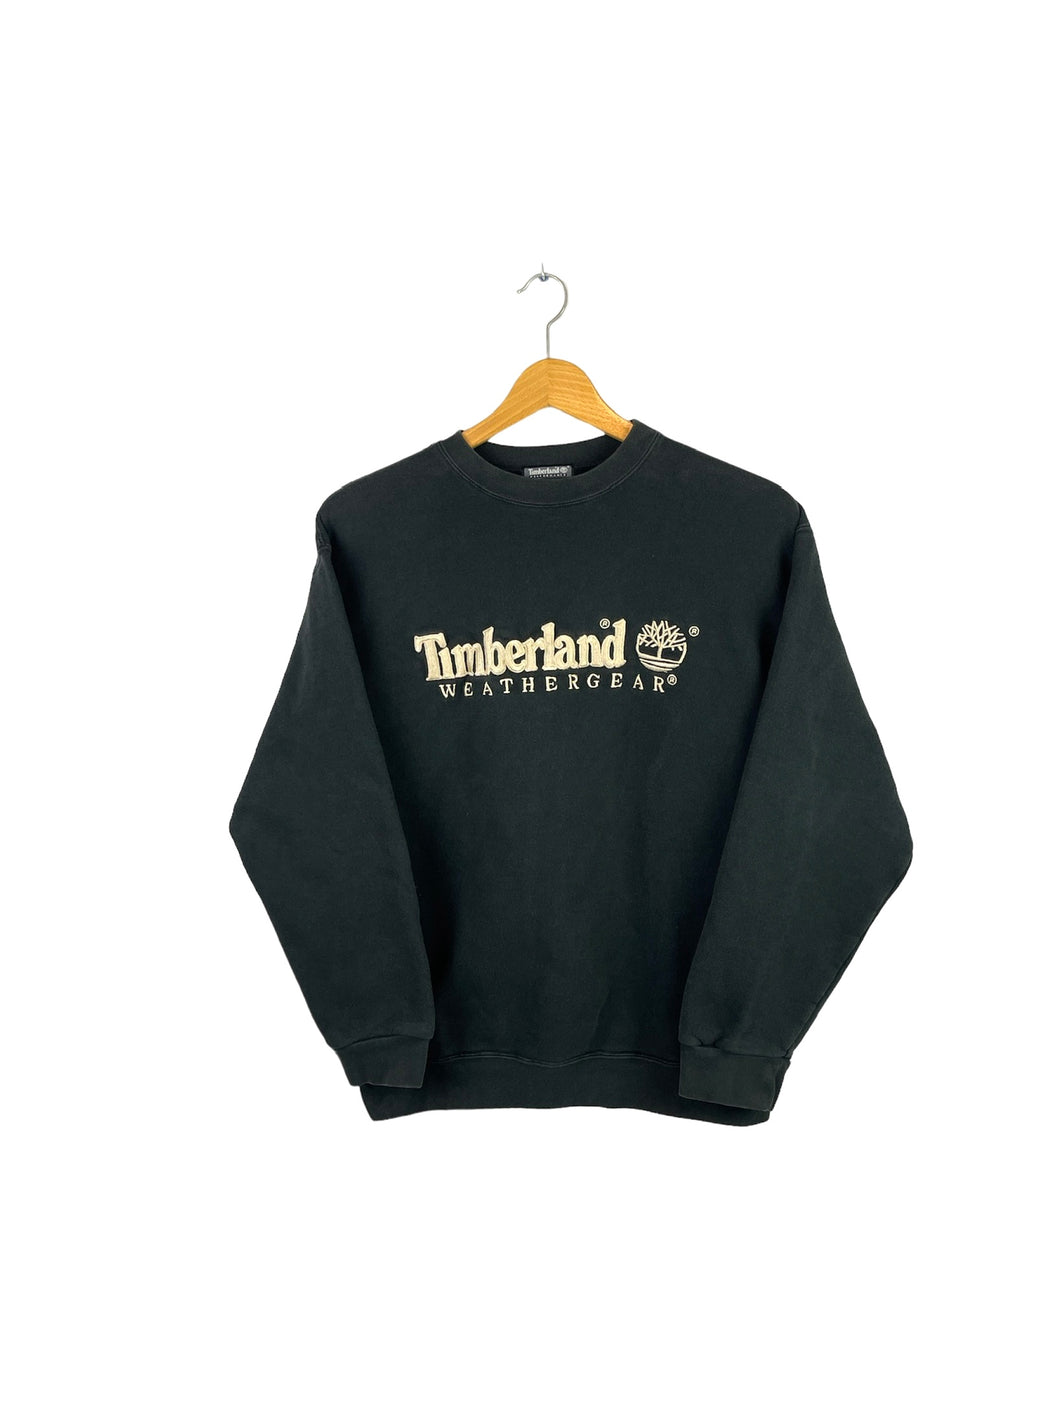 Timberland Sweatshirt - Small